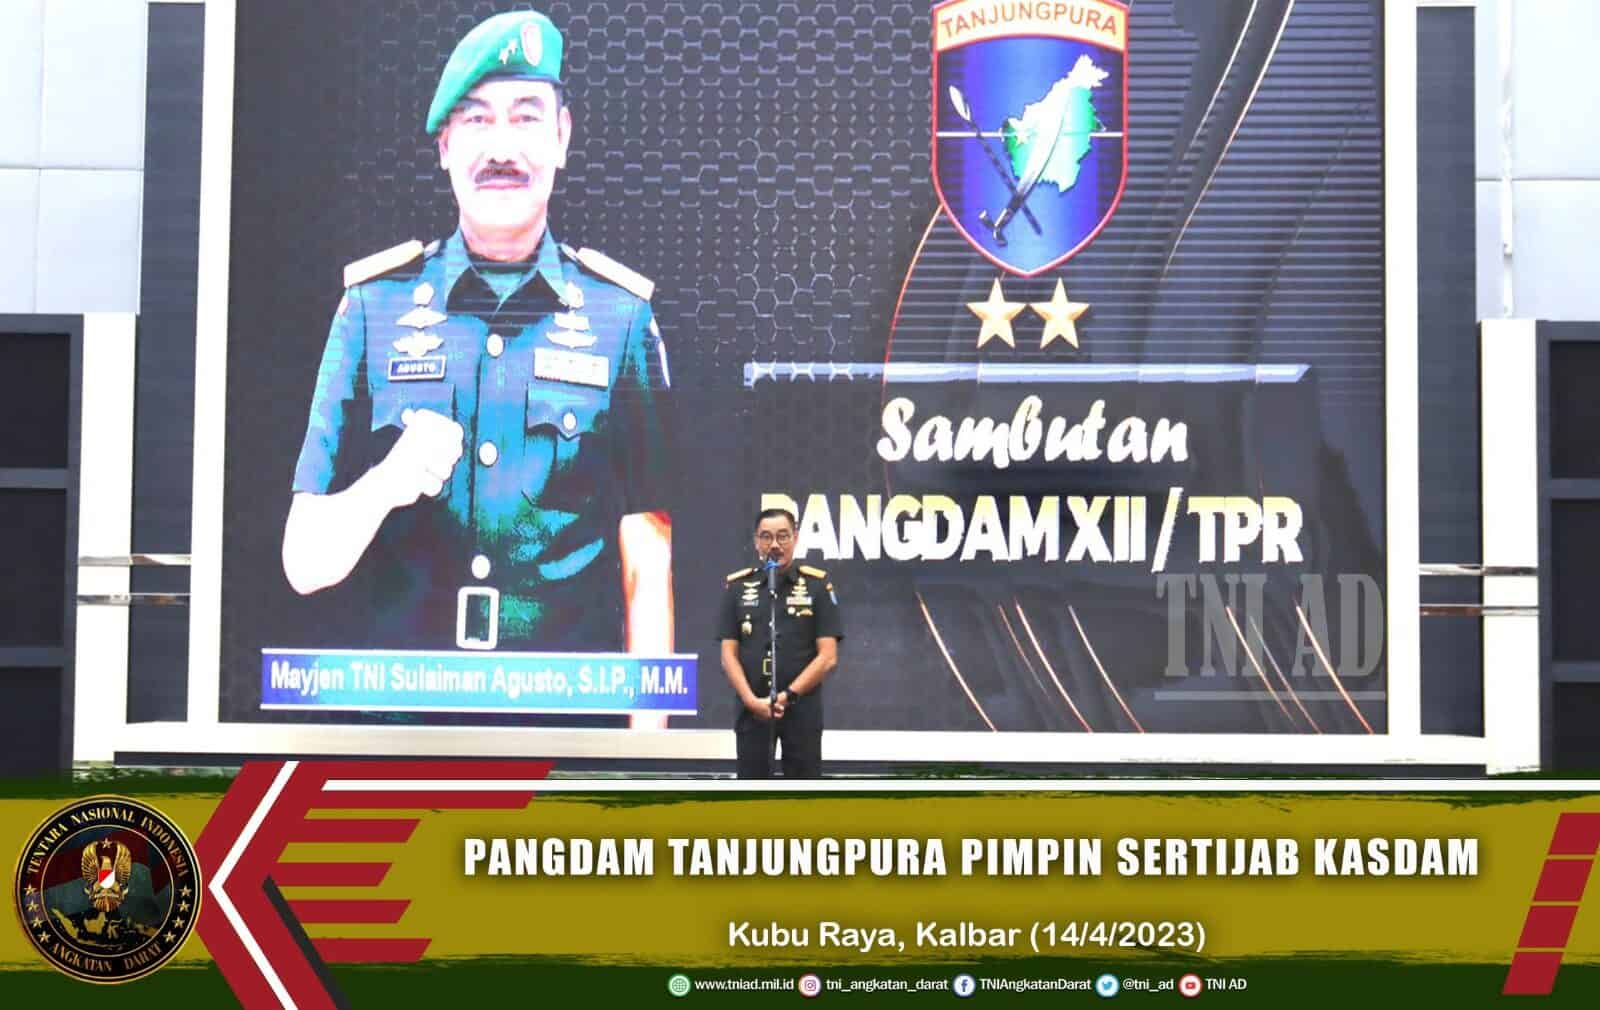 Pangdam Tanjungpura Pimpin Sertijab Kasdam